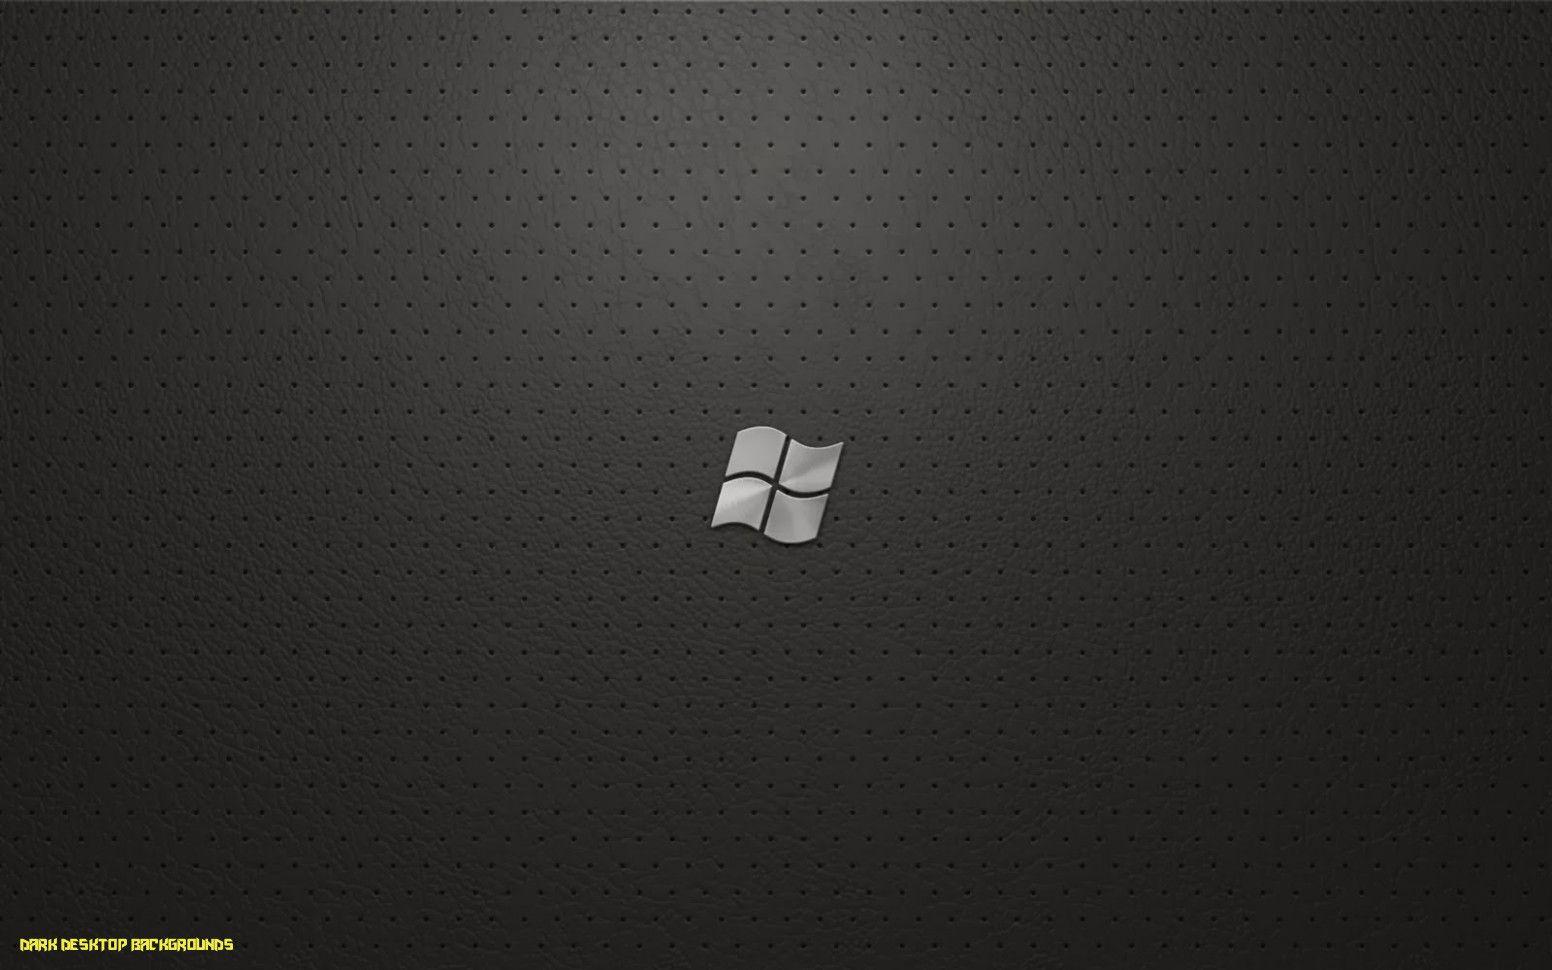 Dark Windows HD Wallpapers - Top Free Dark Windows HD Backgrounds ...